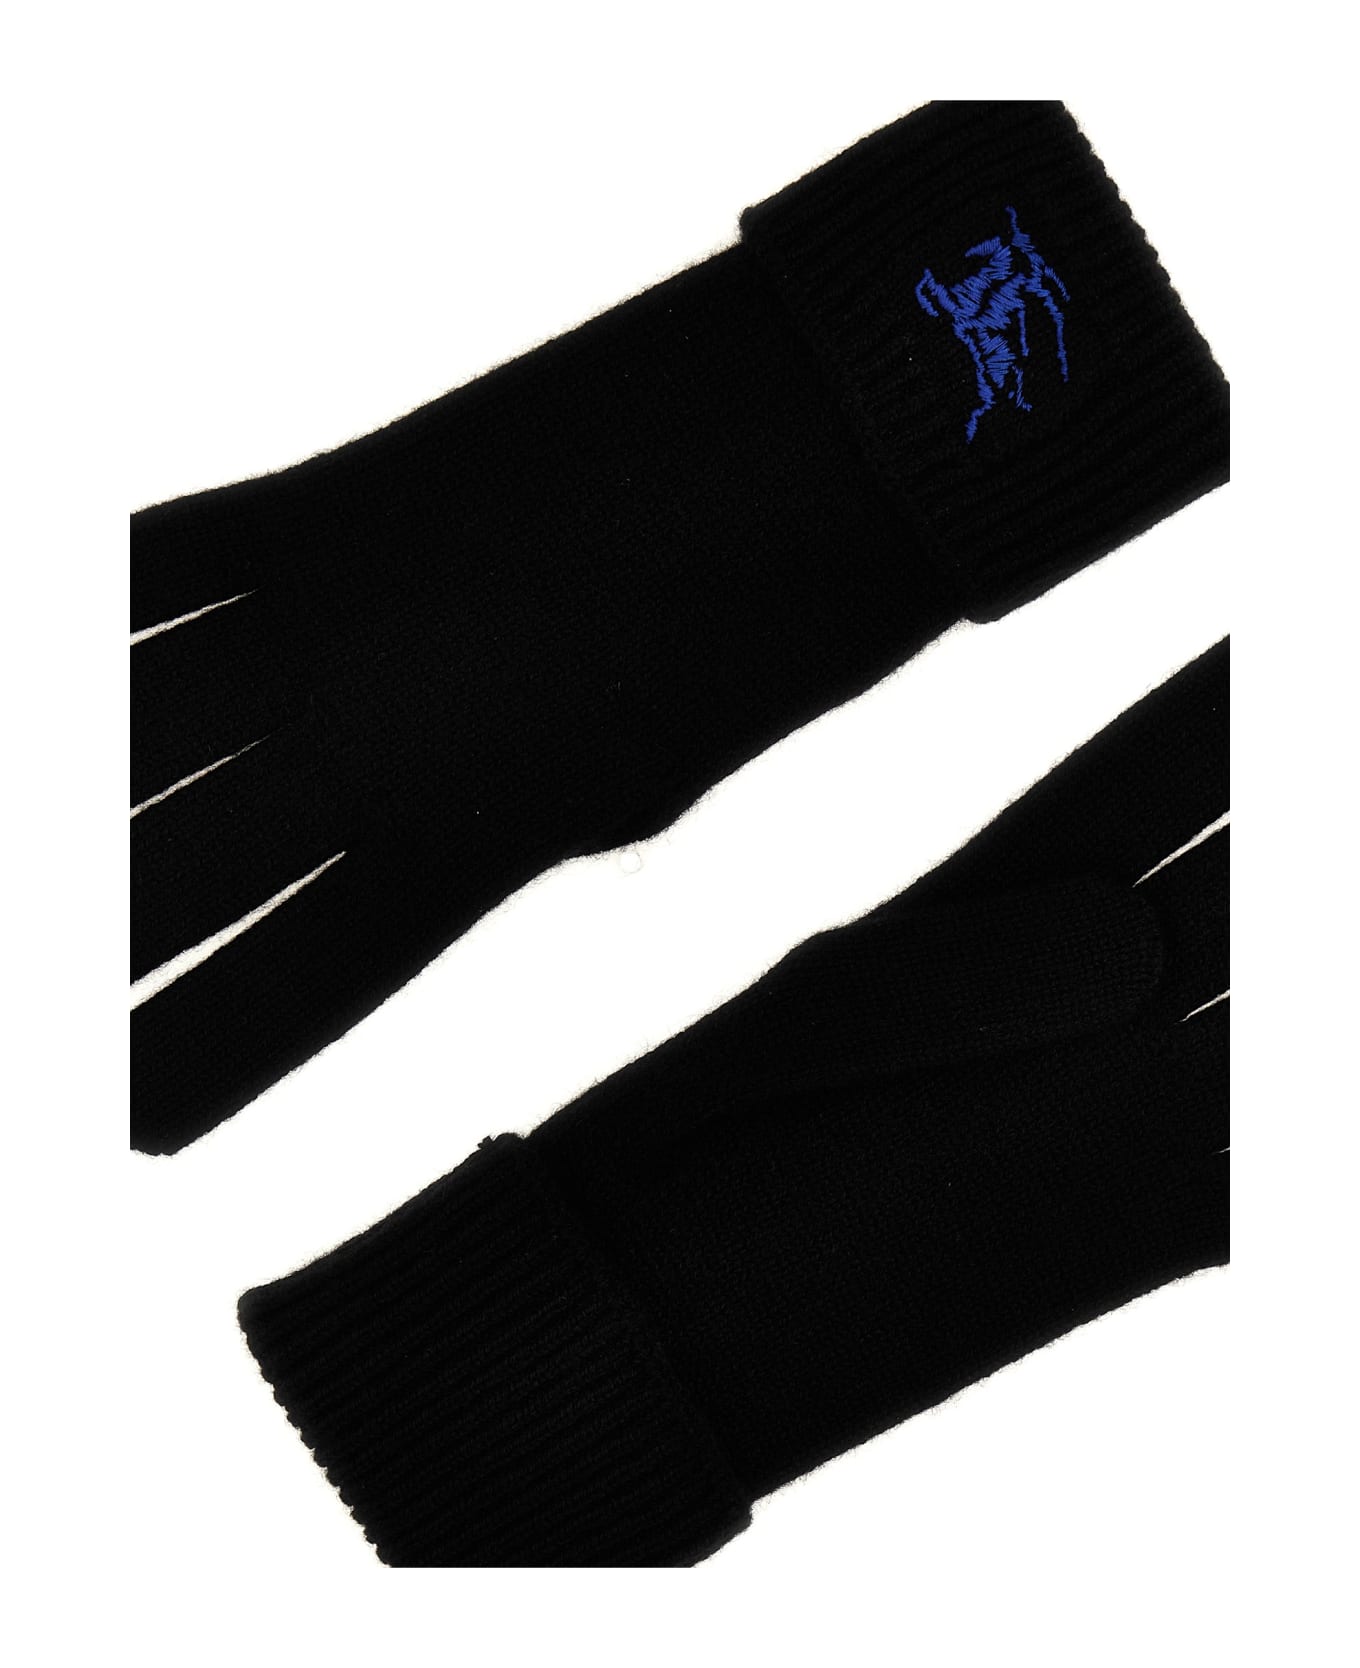 Burberry 'equestrian Knight Design' Gloves - Black  